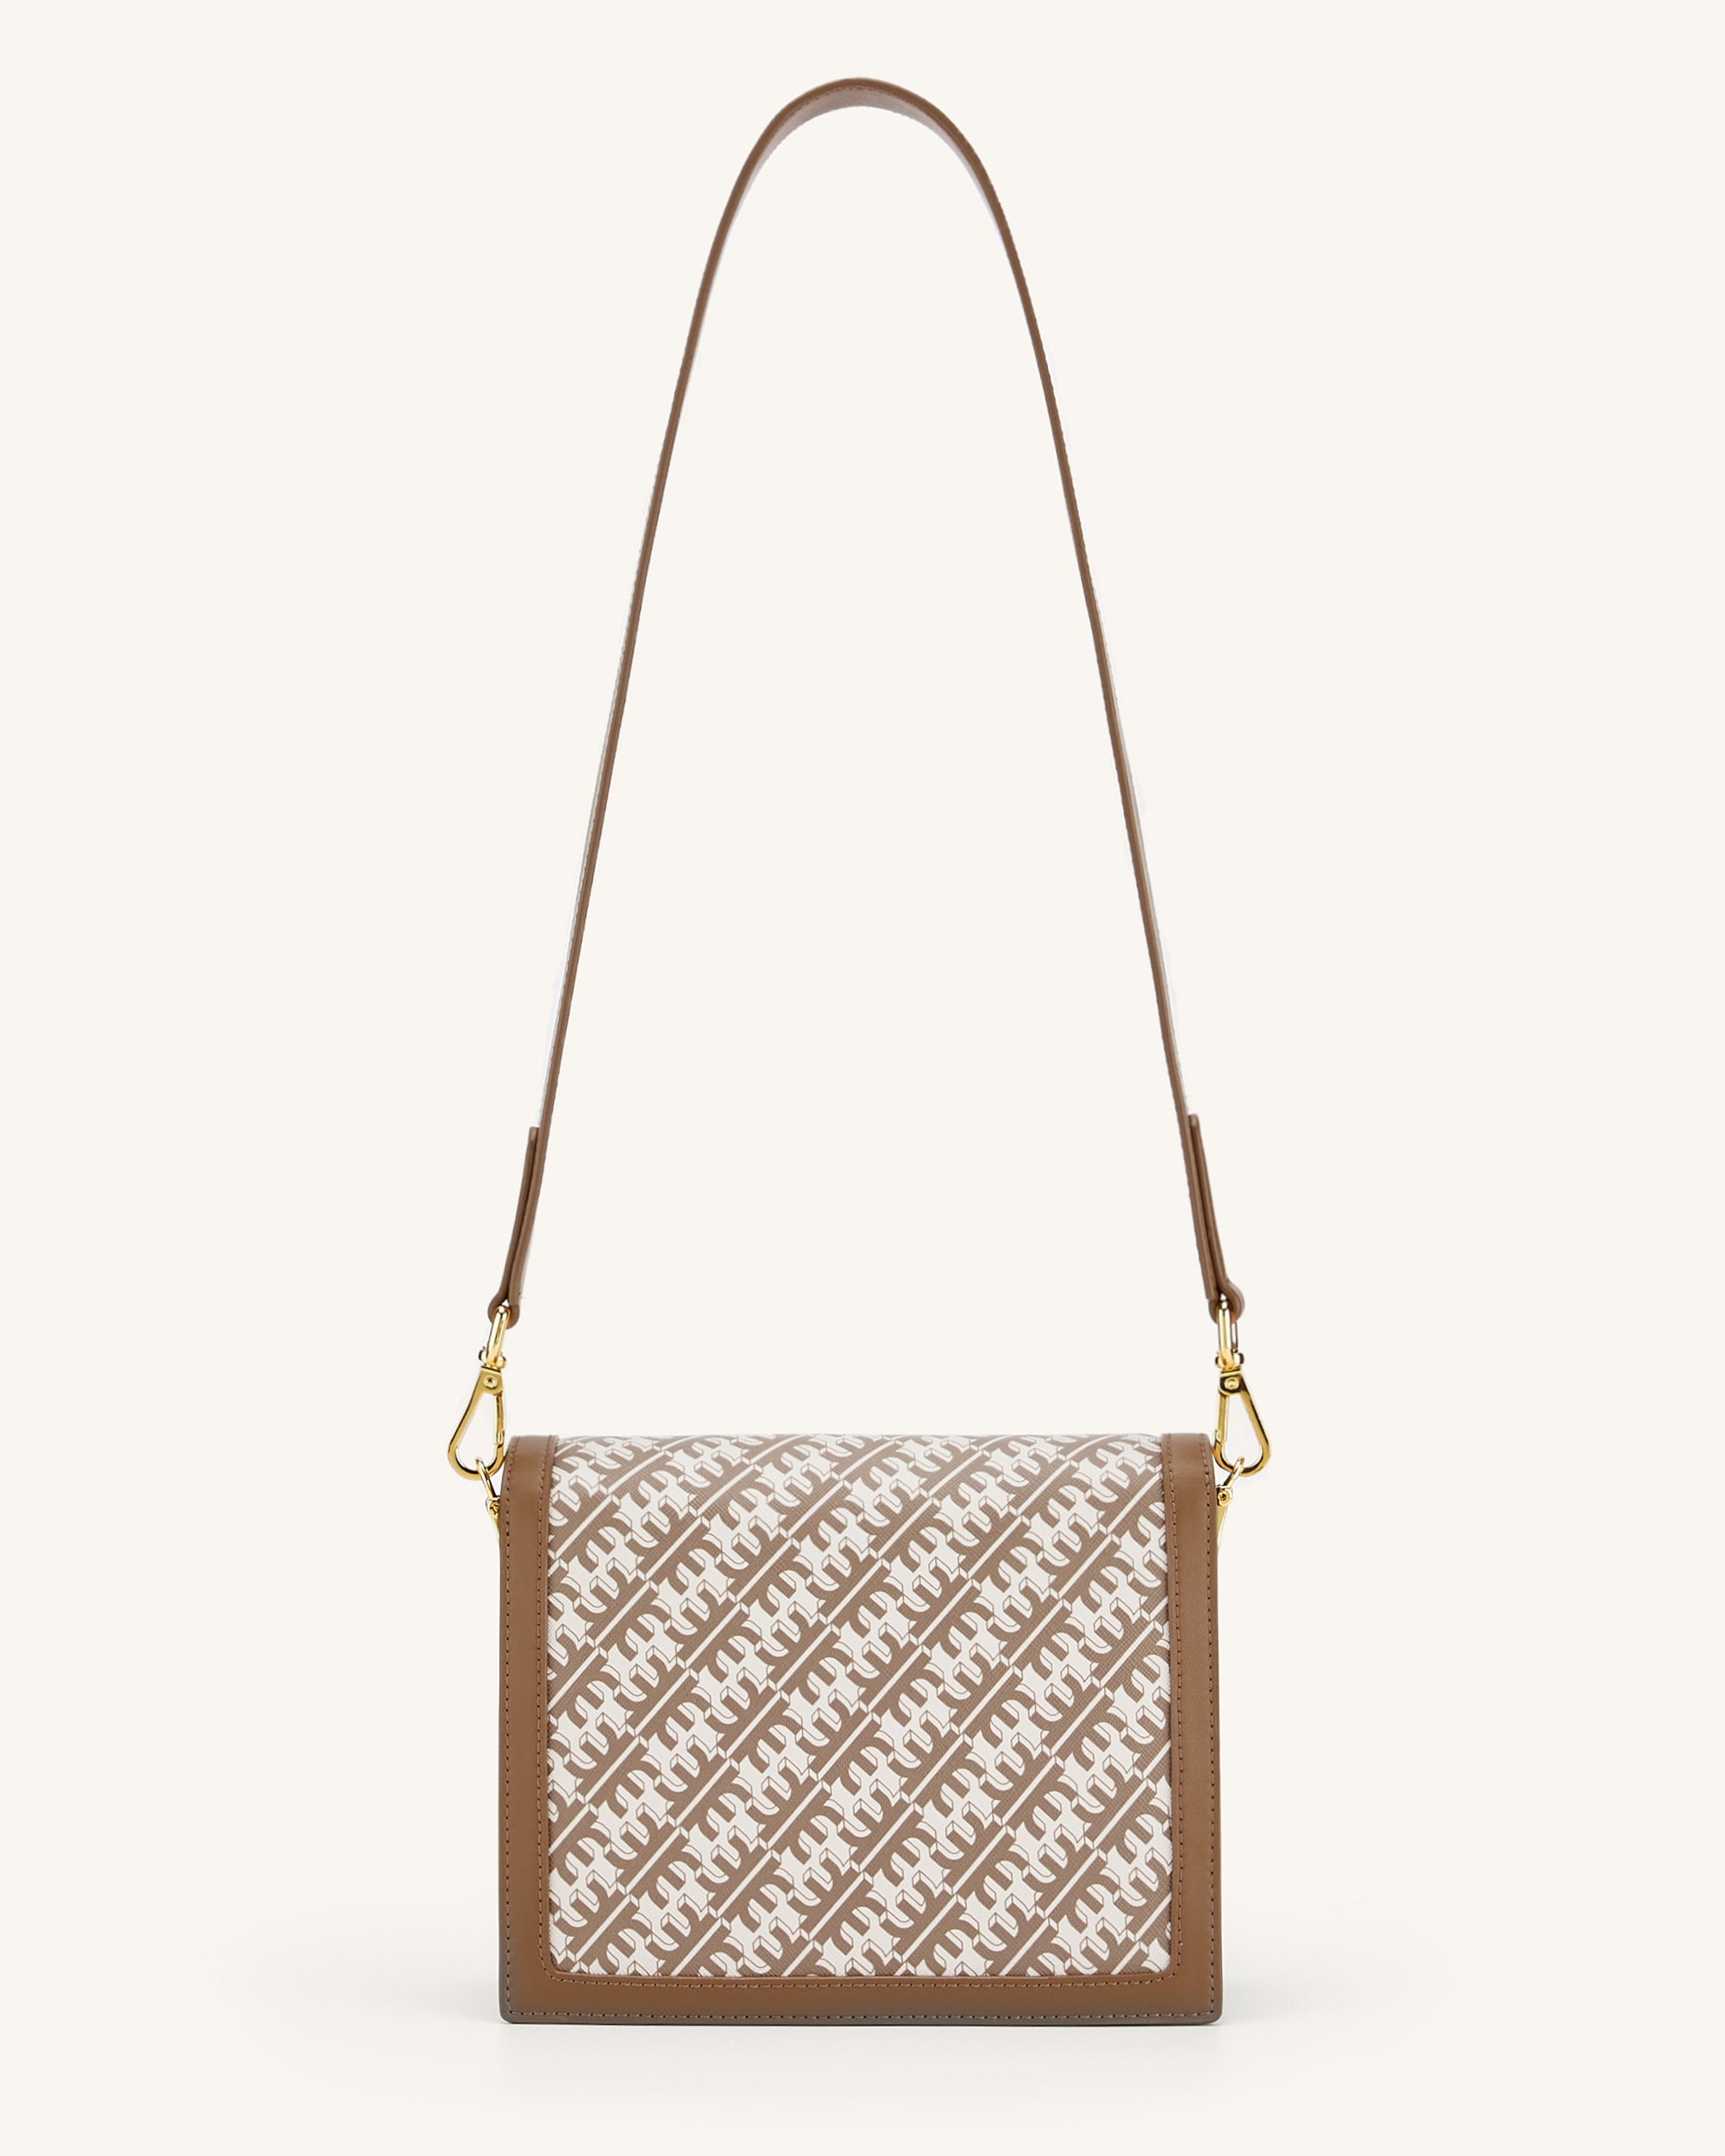 JW PEI FEI Mini Phone Crossbody Bag Women Leather little Trendy Purse 90s  Shoulder Handbags